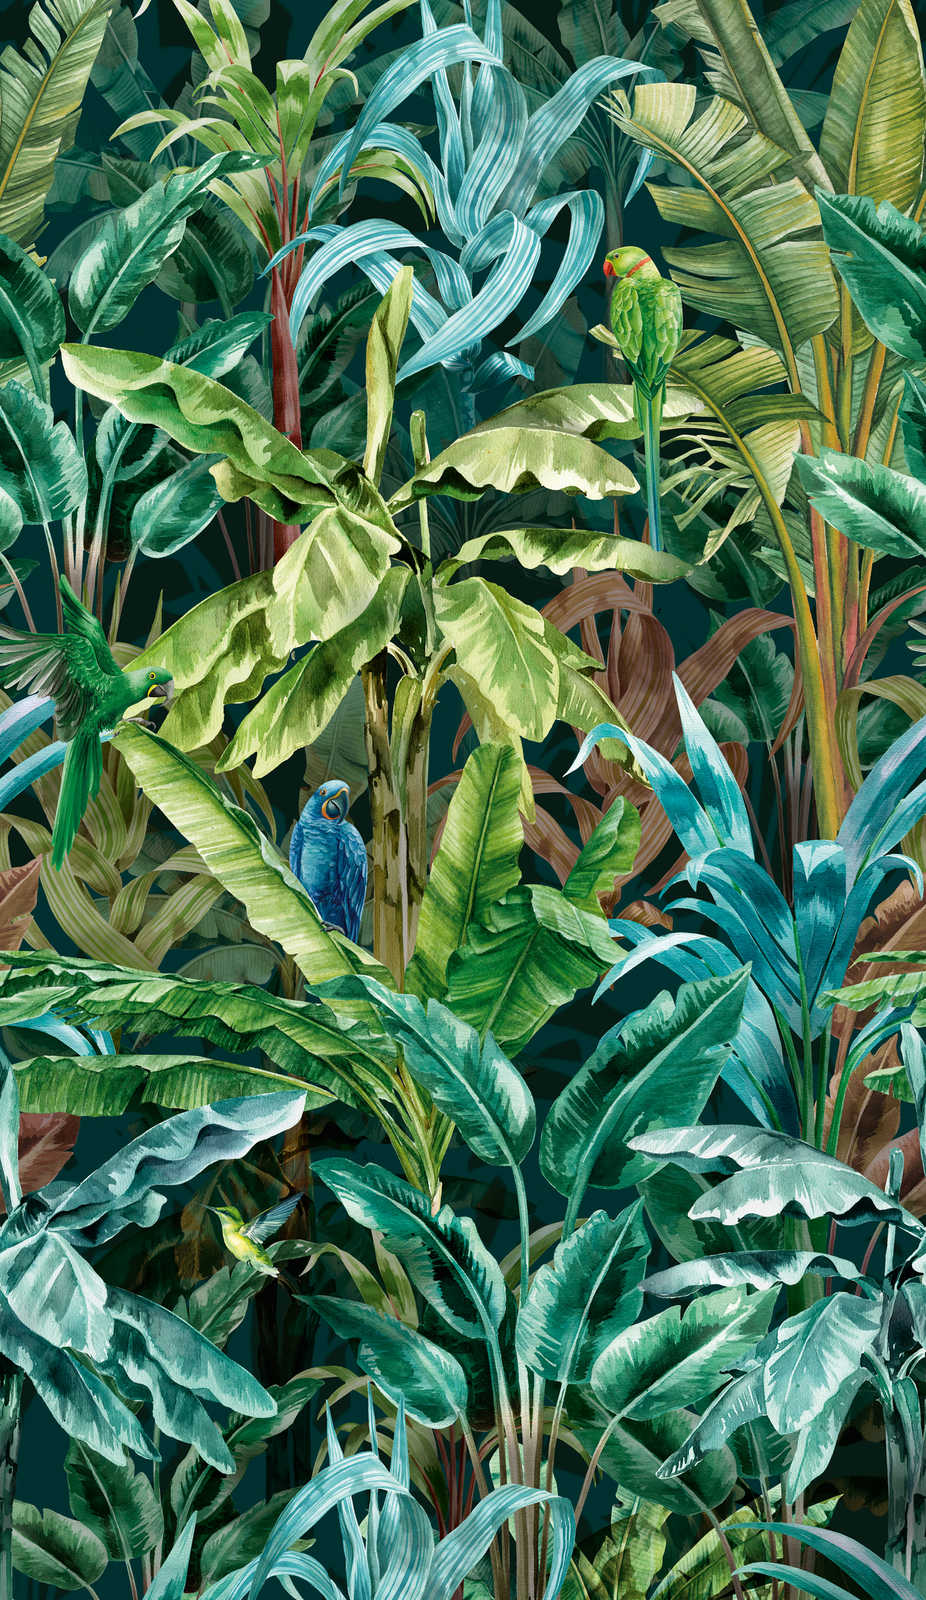             Papier peint intissé avec motif jungle flashy - vert, bleu, marron
        